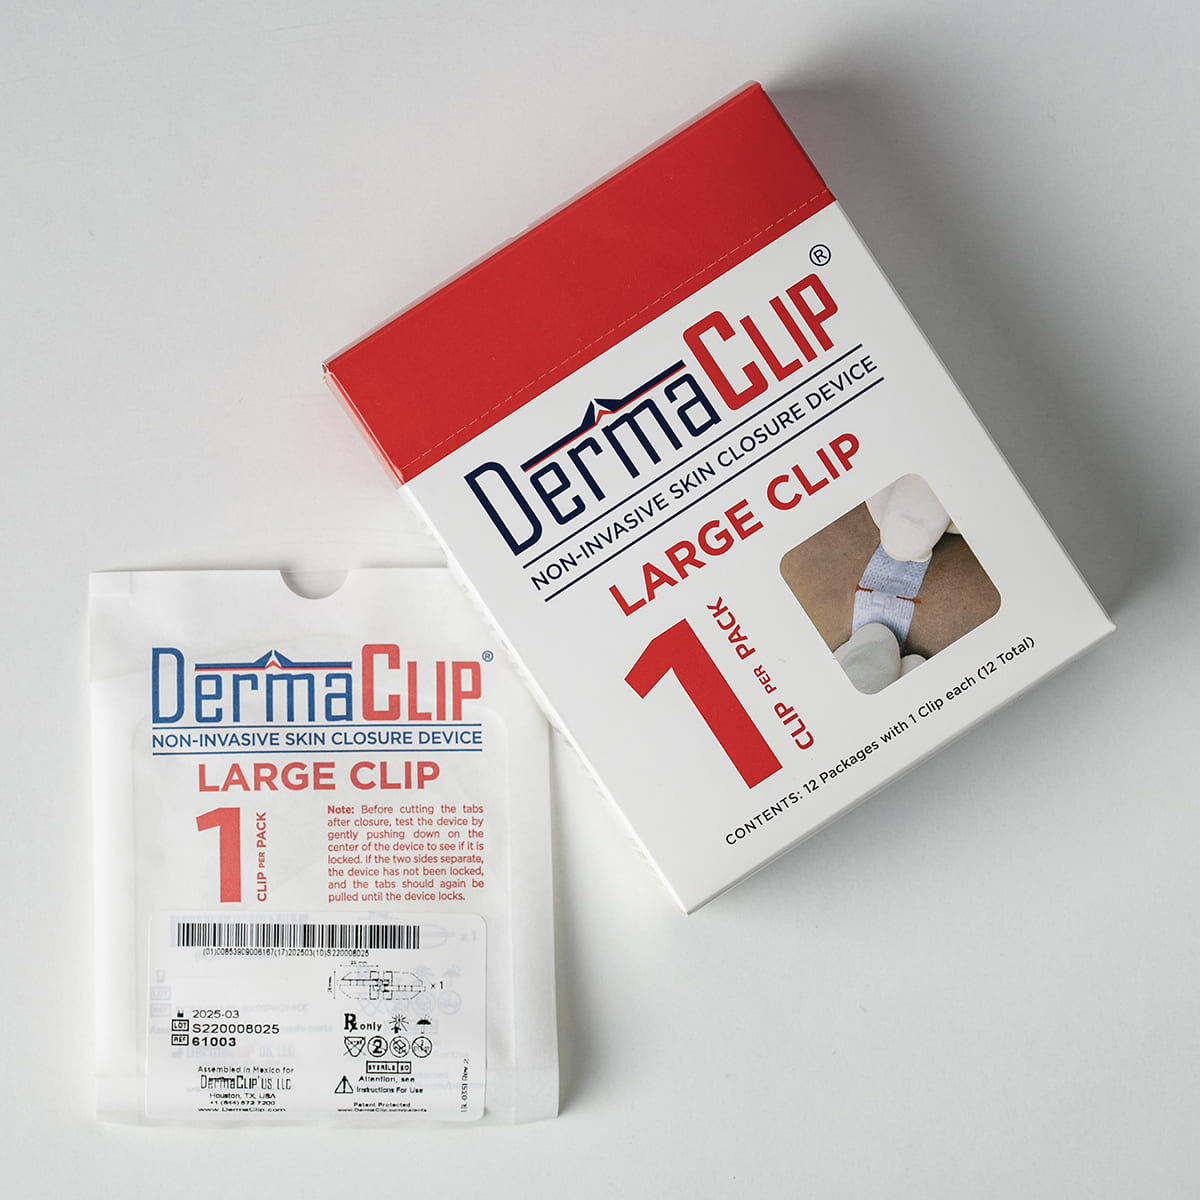 DermaClip packaging front - large clip